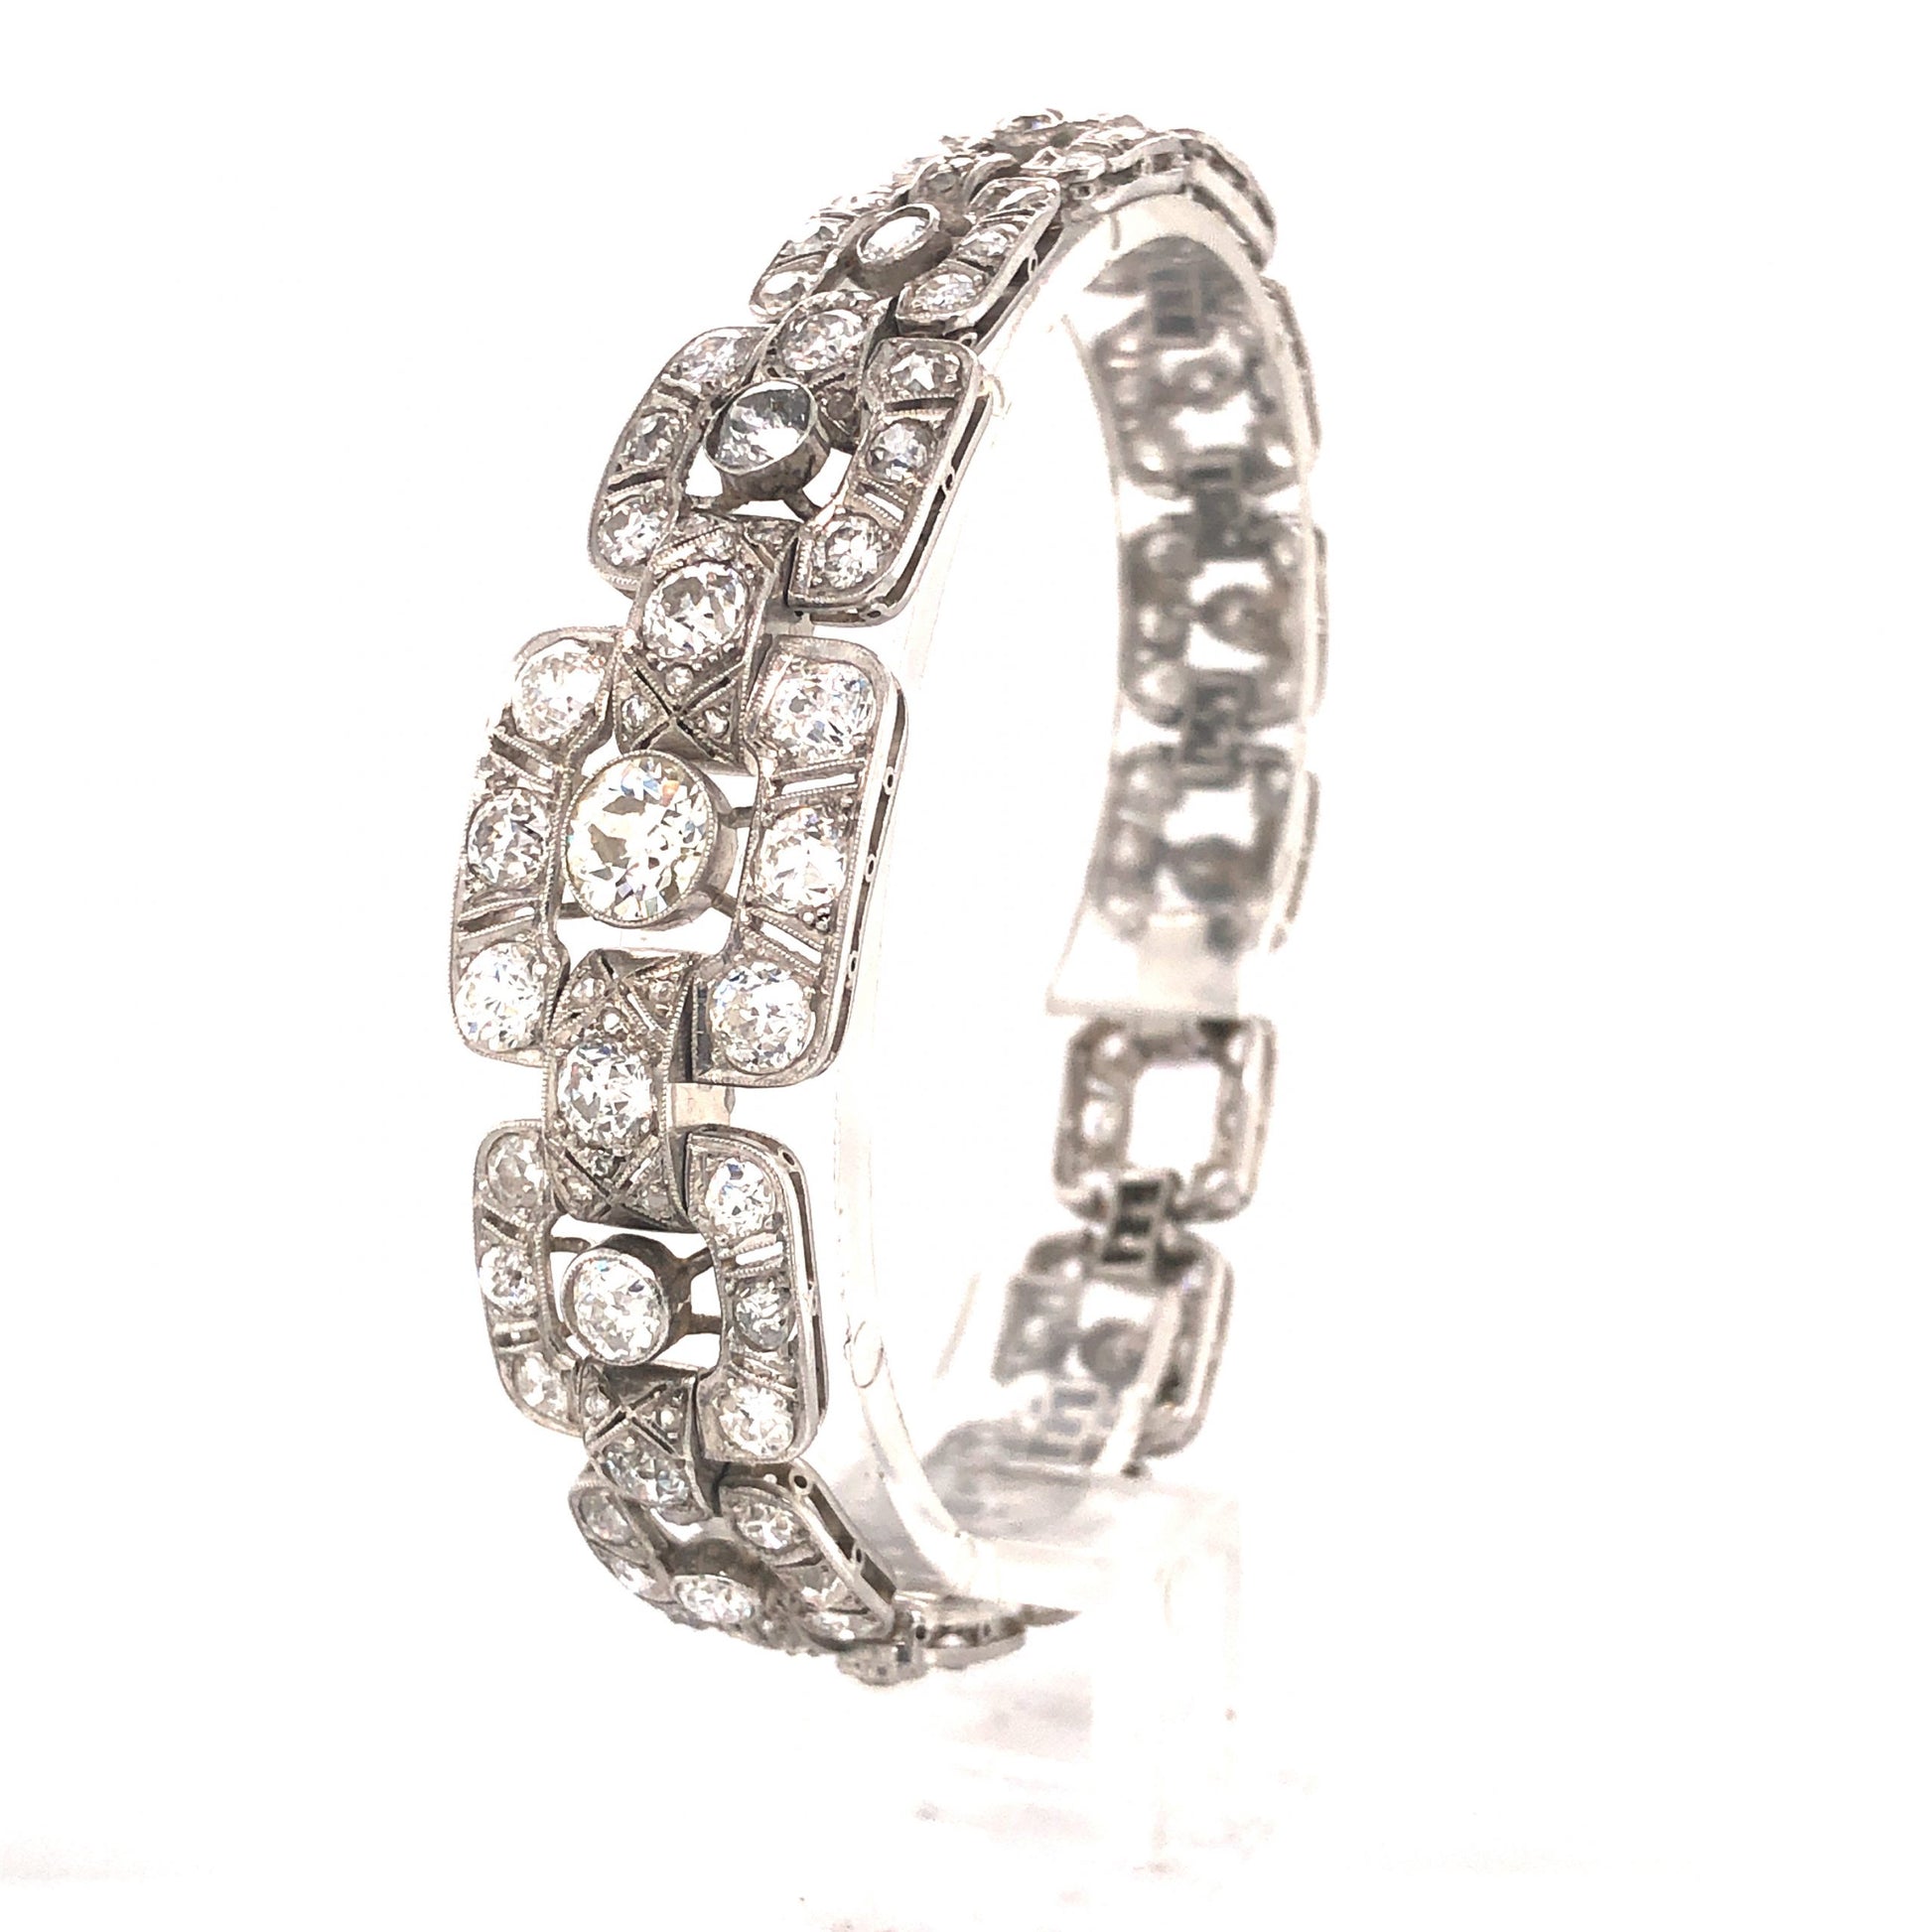 11.30 Art Deco Diamond Bracelet in PlatinumComposition: PlatinumTotal Diamond Weight: 11.30 ctTotal Gram Weight: 31.0 g